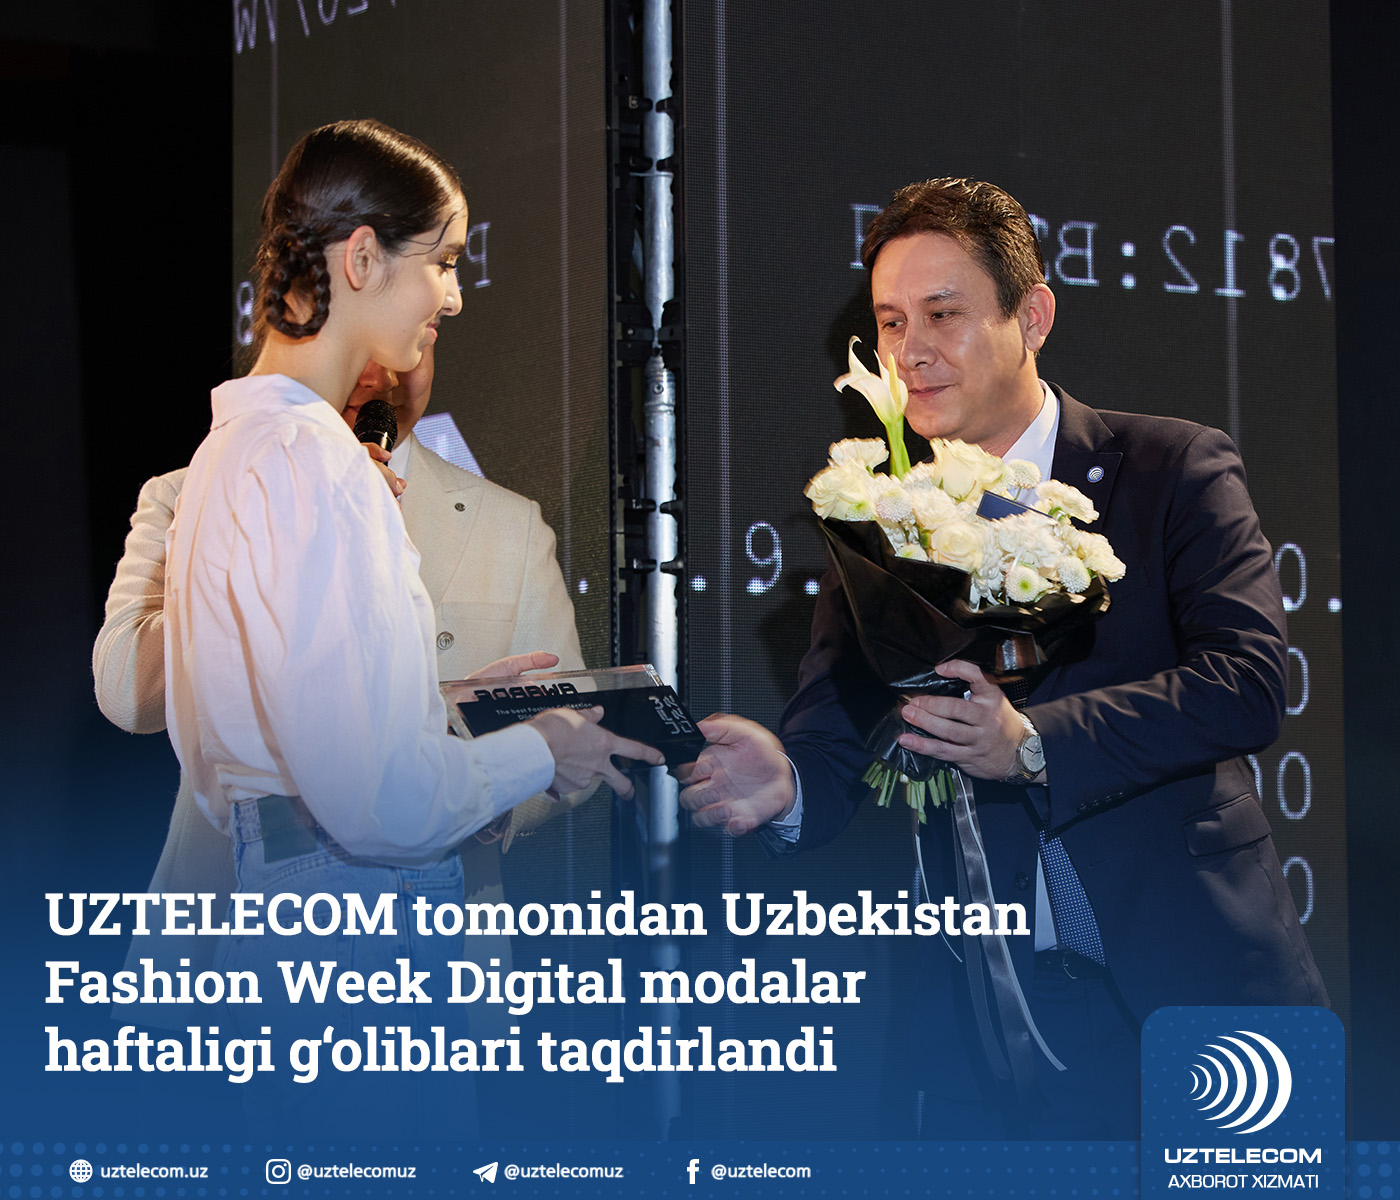 UZTELECOM congratulated the winners of Uzbekistan Fashion Week Digital